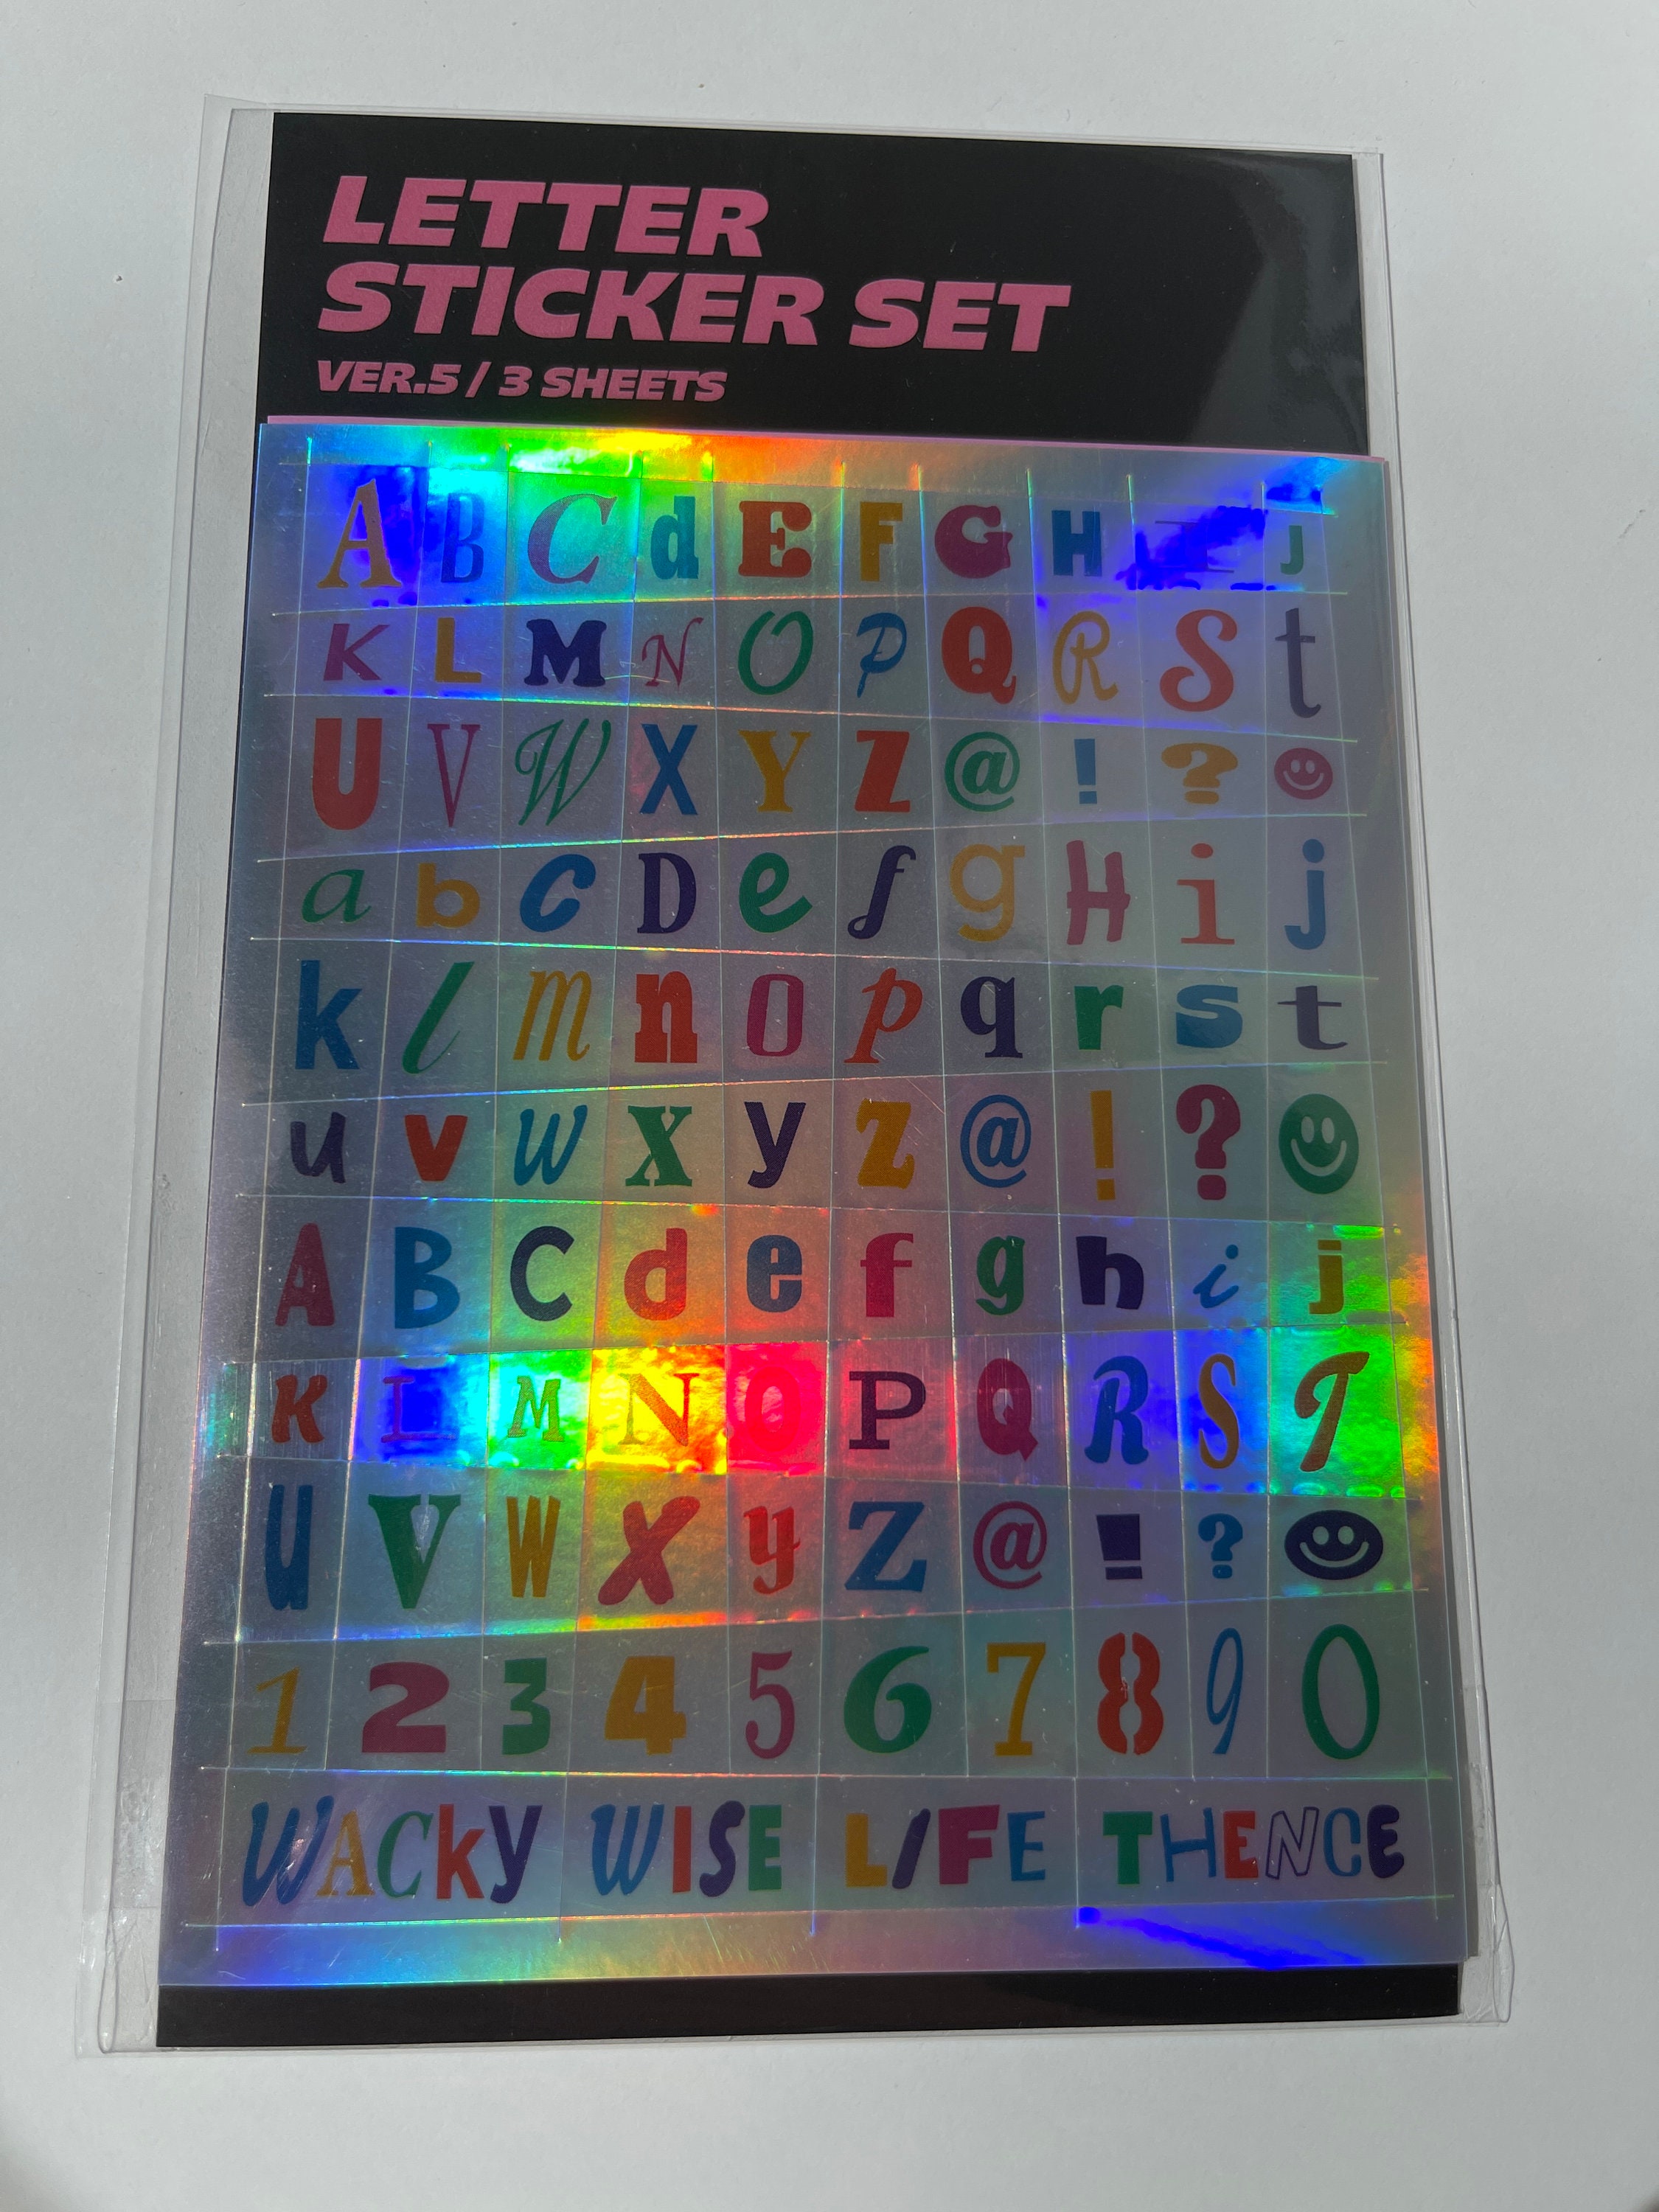 Letter Sticker Set Ver.5